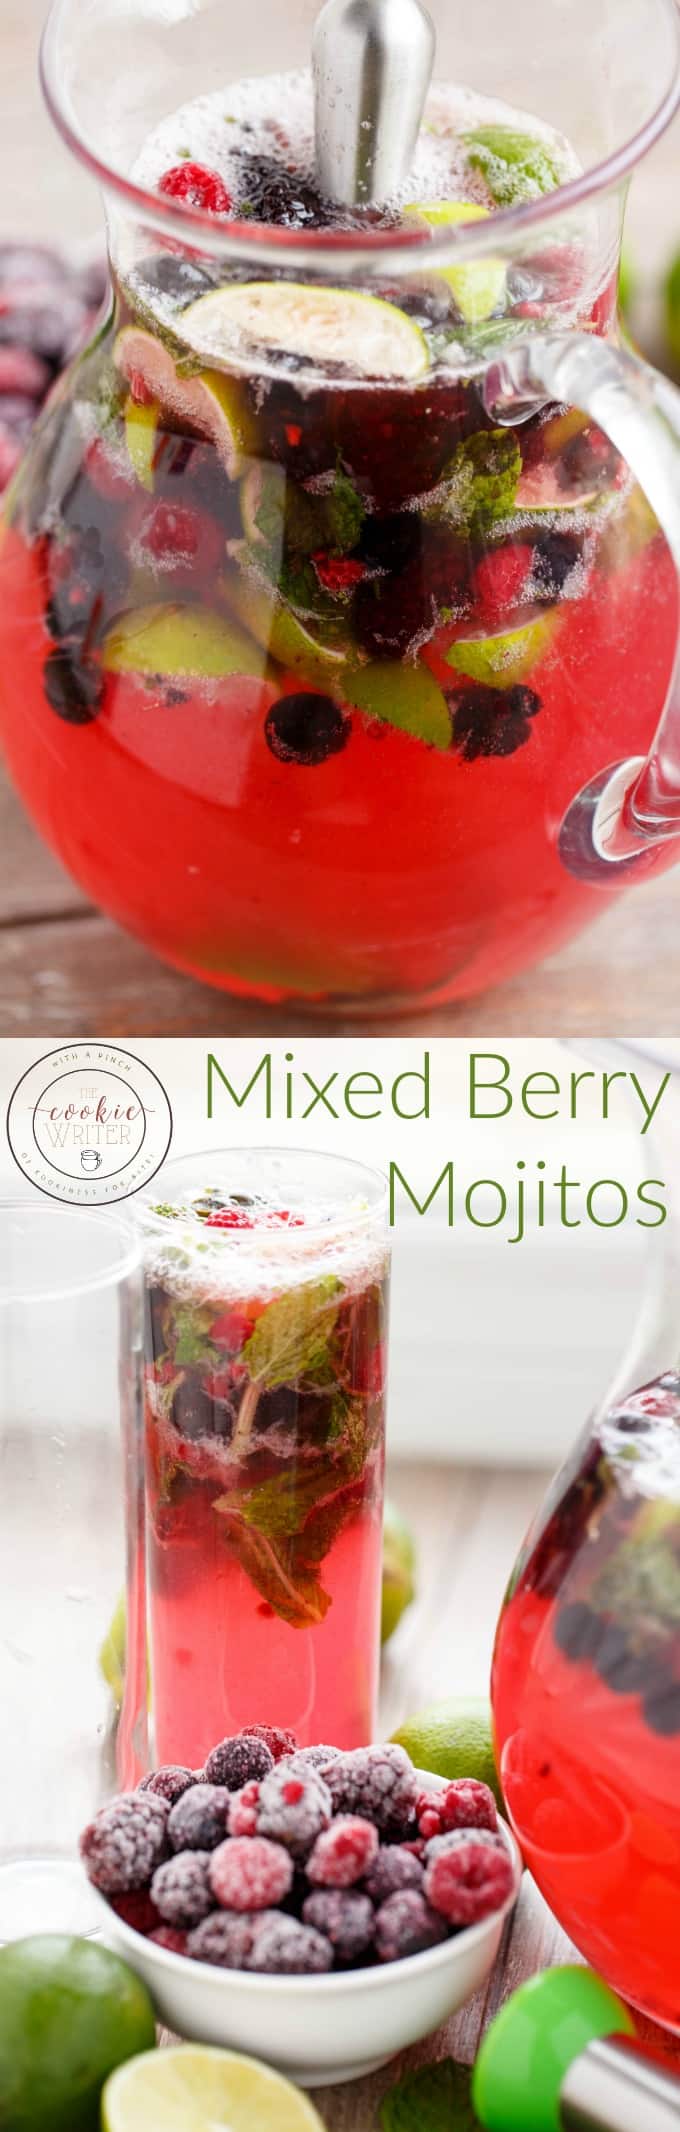 Mixed Berry Mojitos